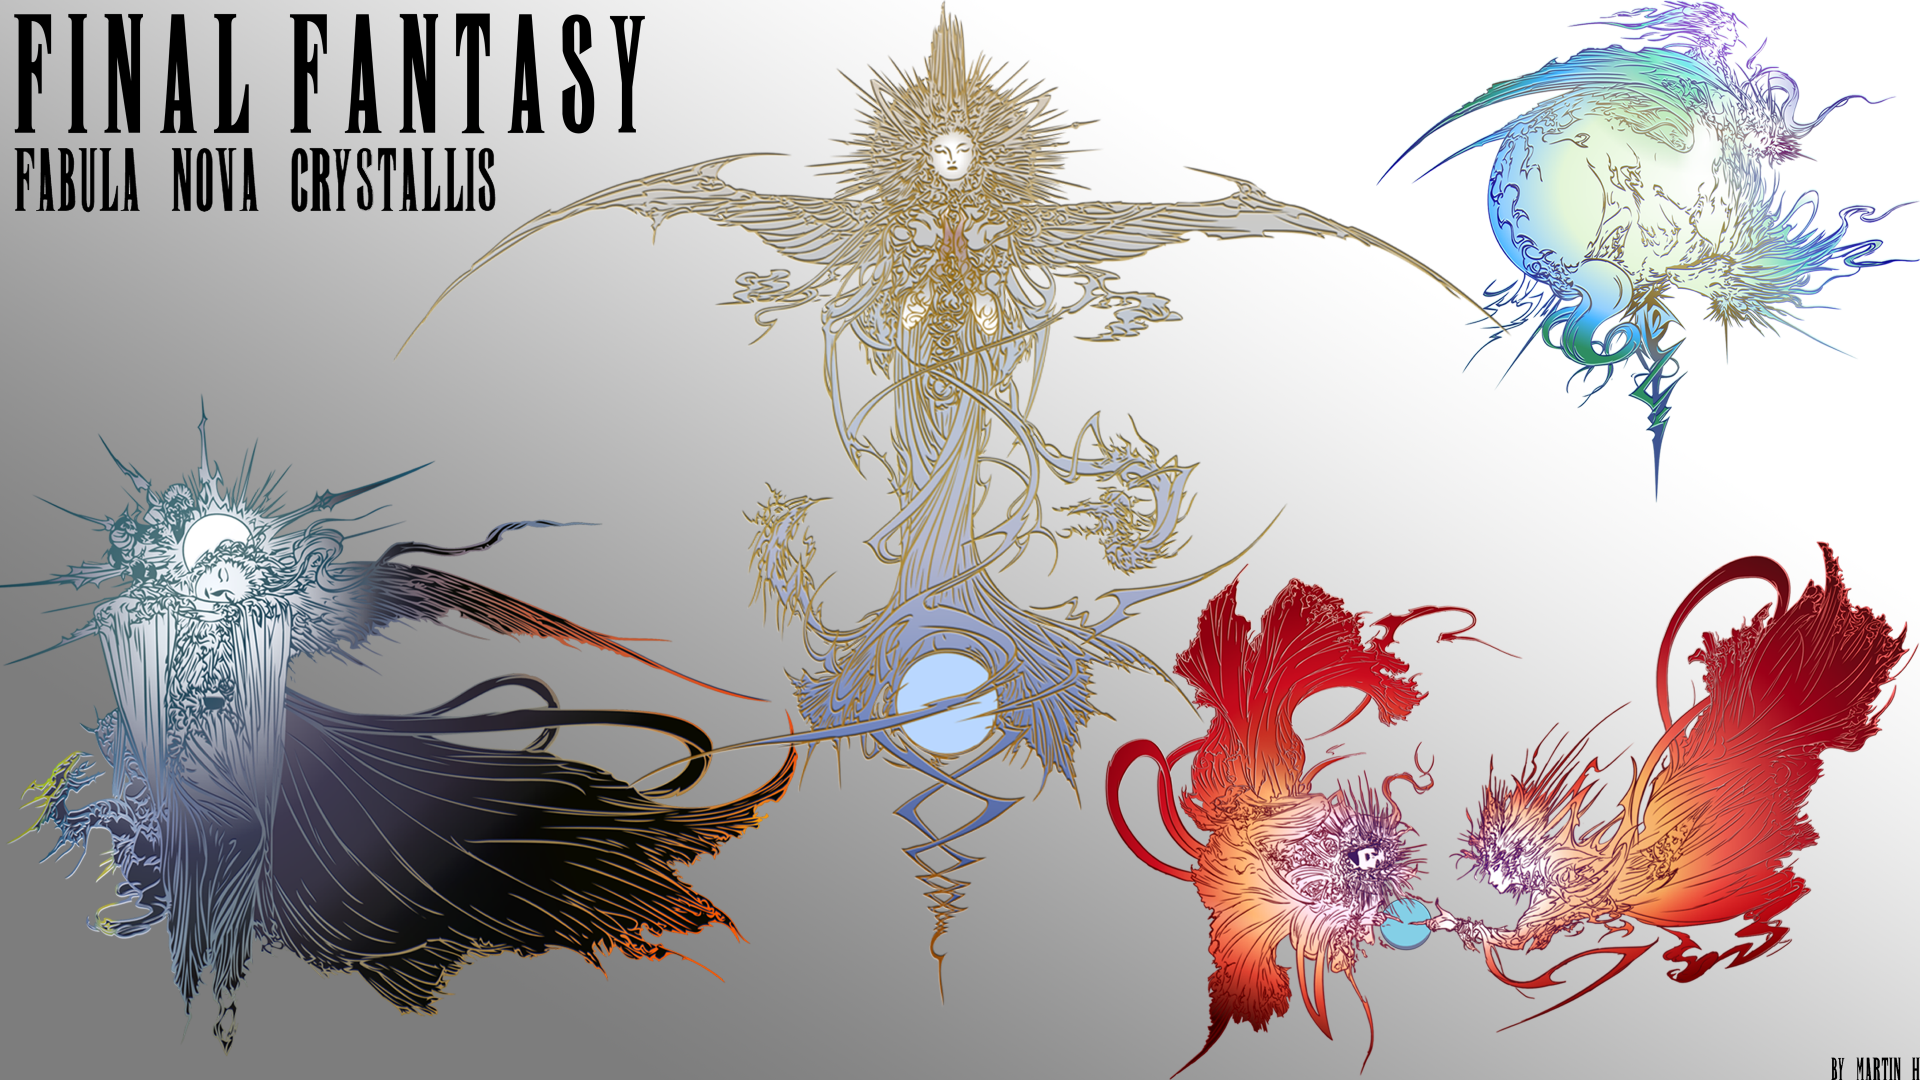 3840x2160 Final Fantasy - Fabula Nova Crystallis Wallpaper Background Image...